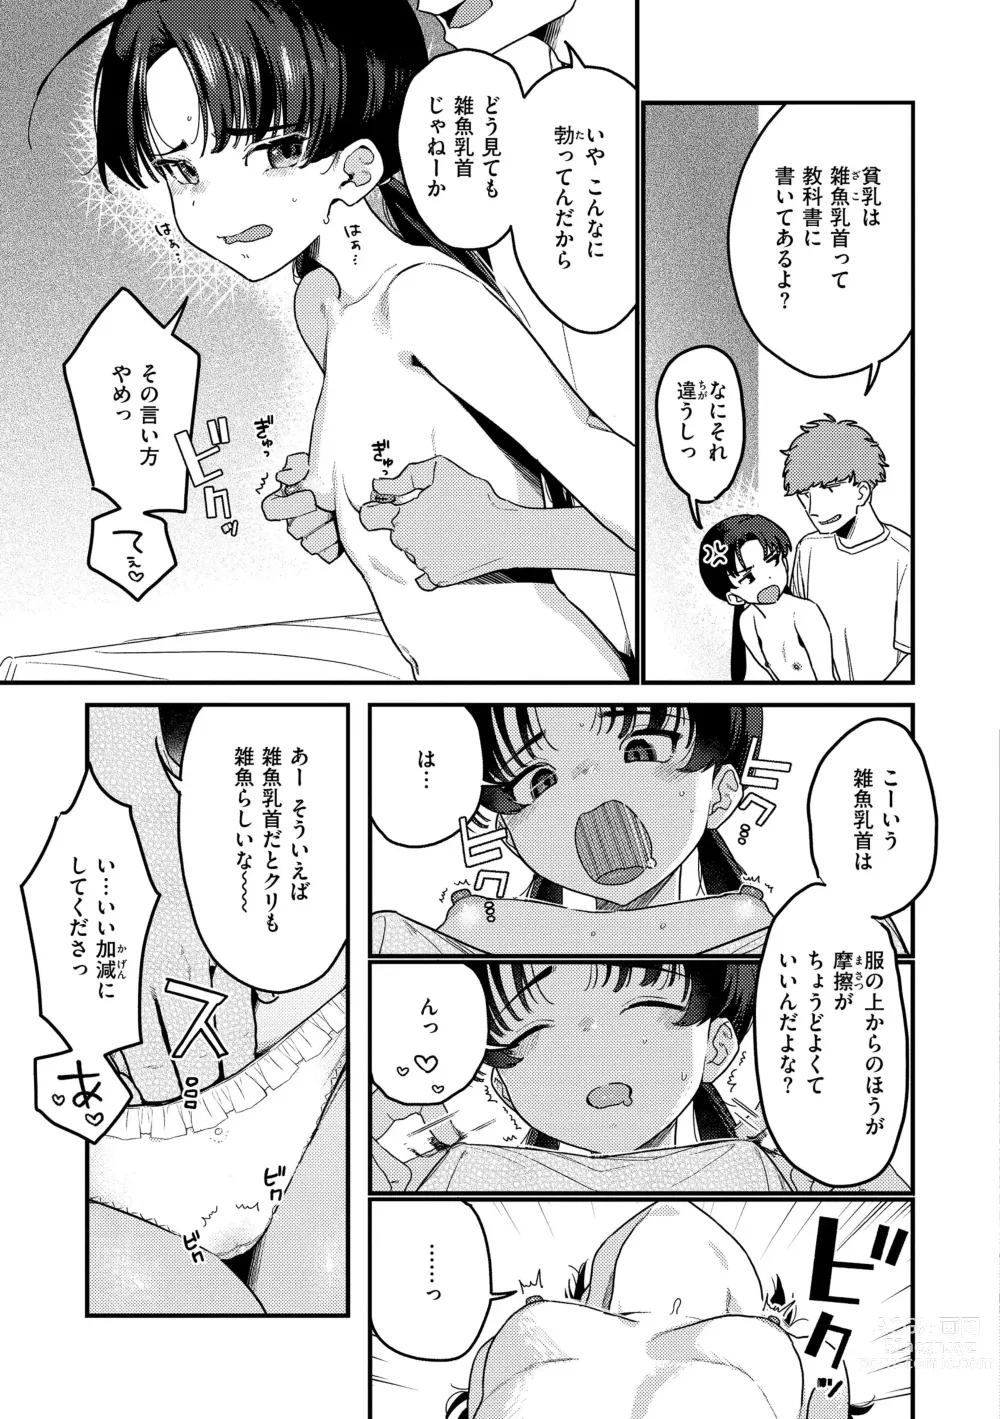 Page 19 of manga Wakarasete. - Show me reality.